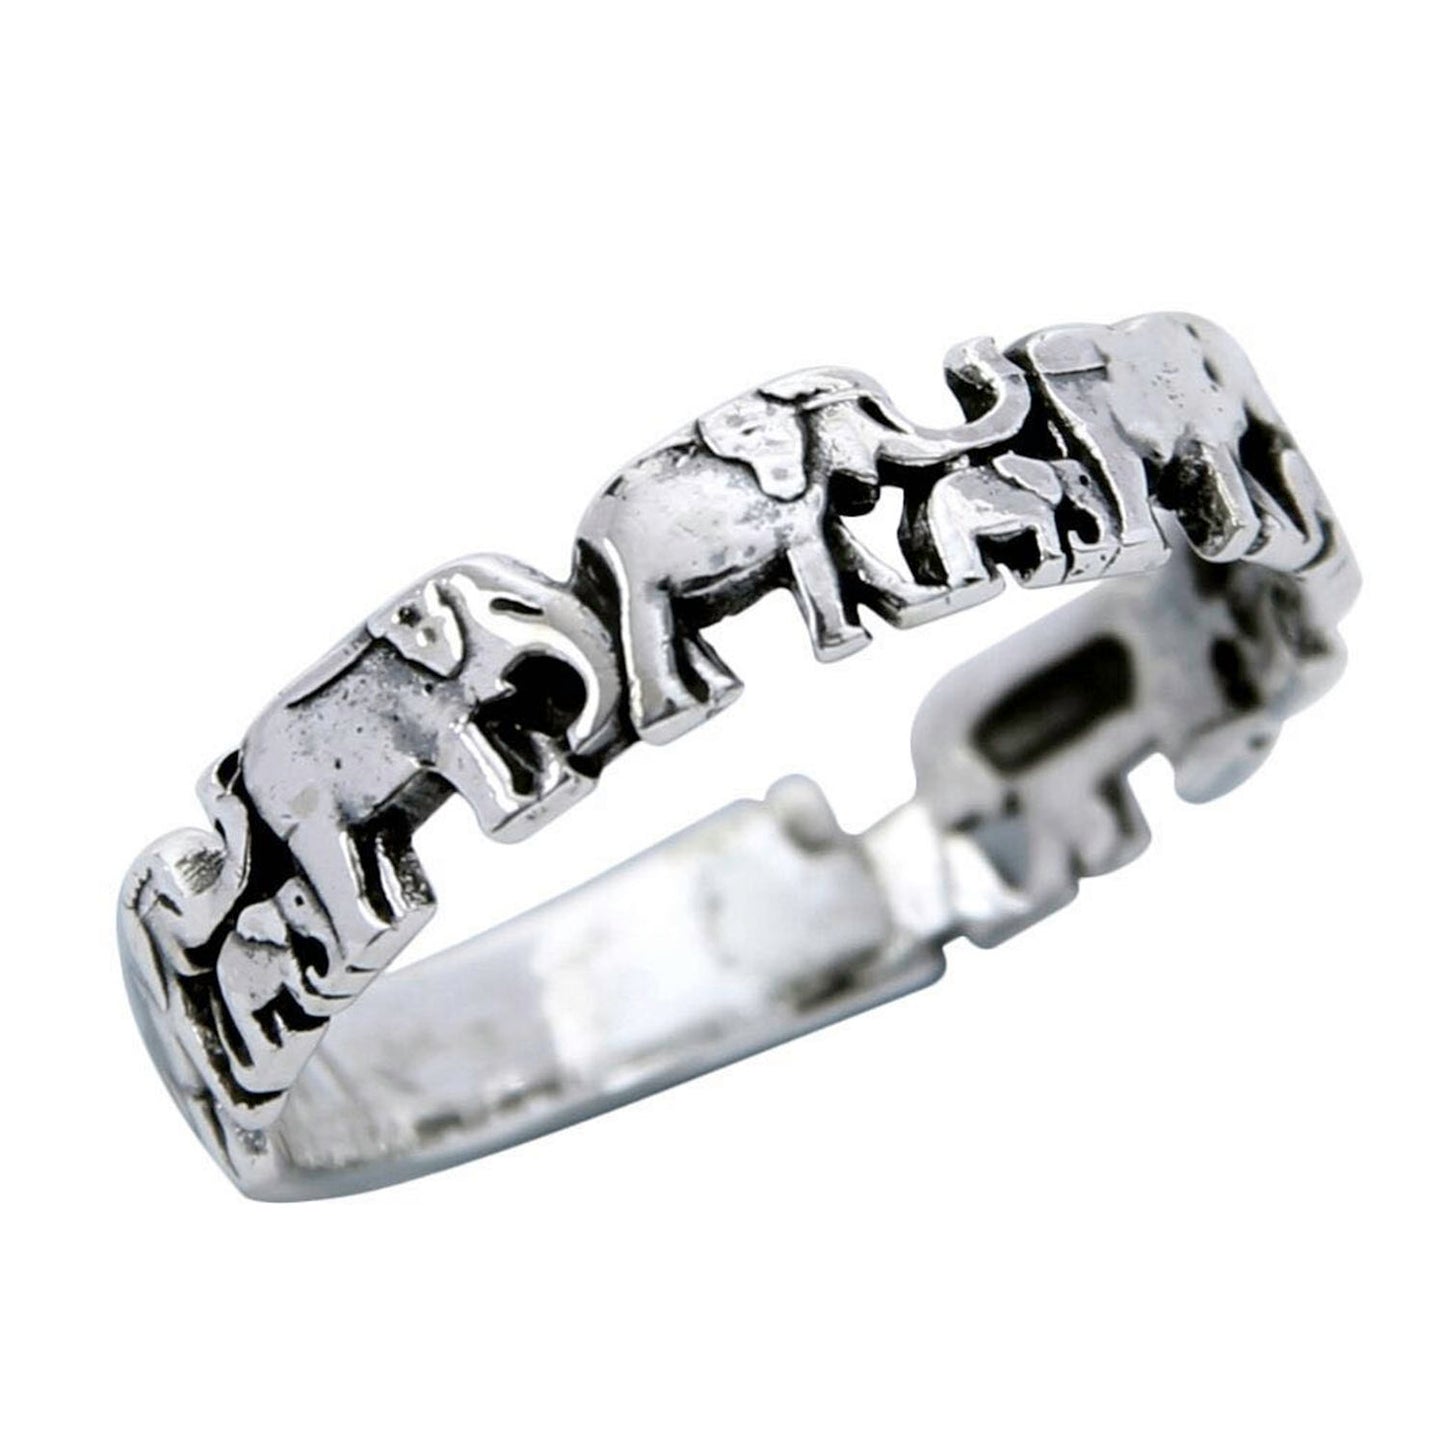 Ganesha Handicrafts, Elephant Band - Sterling Silver Ring, Elephant Band Ring, Band, Sterling Band, Silver Ring, Bisexual Band, Bisexual Ring, Stylish Band.  